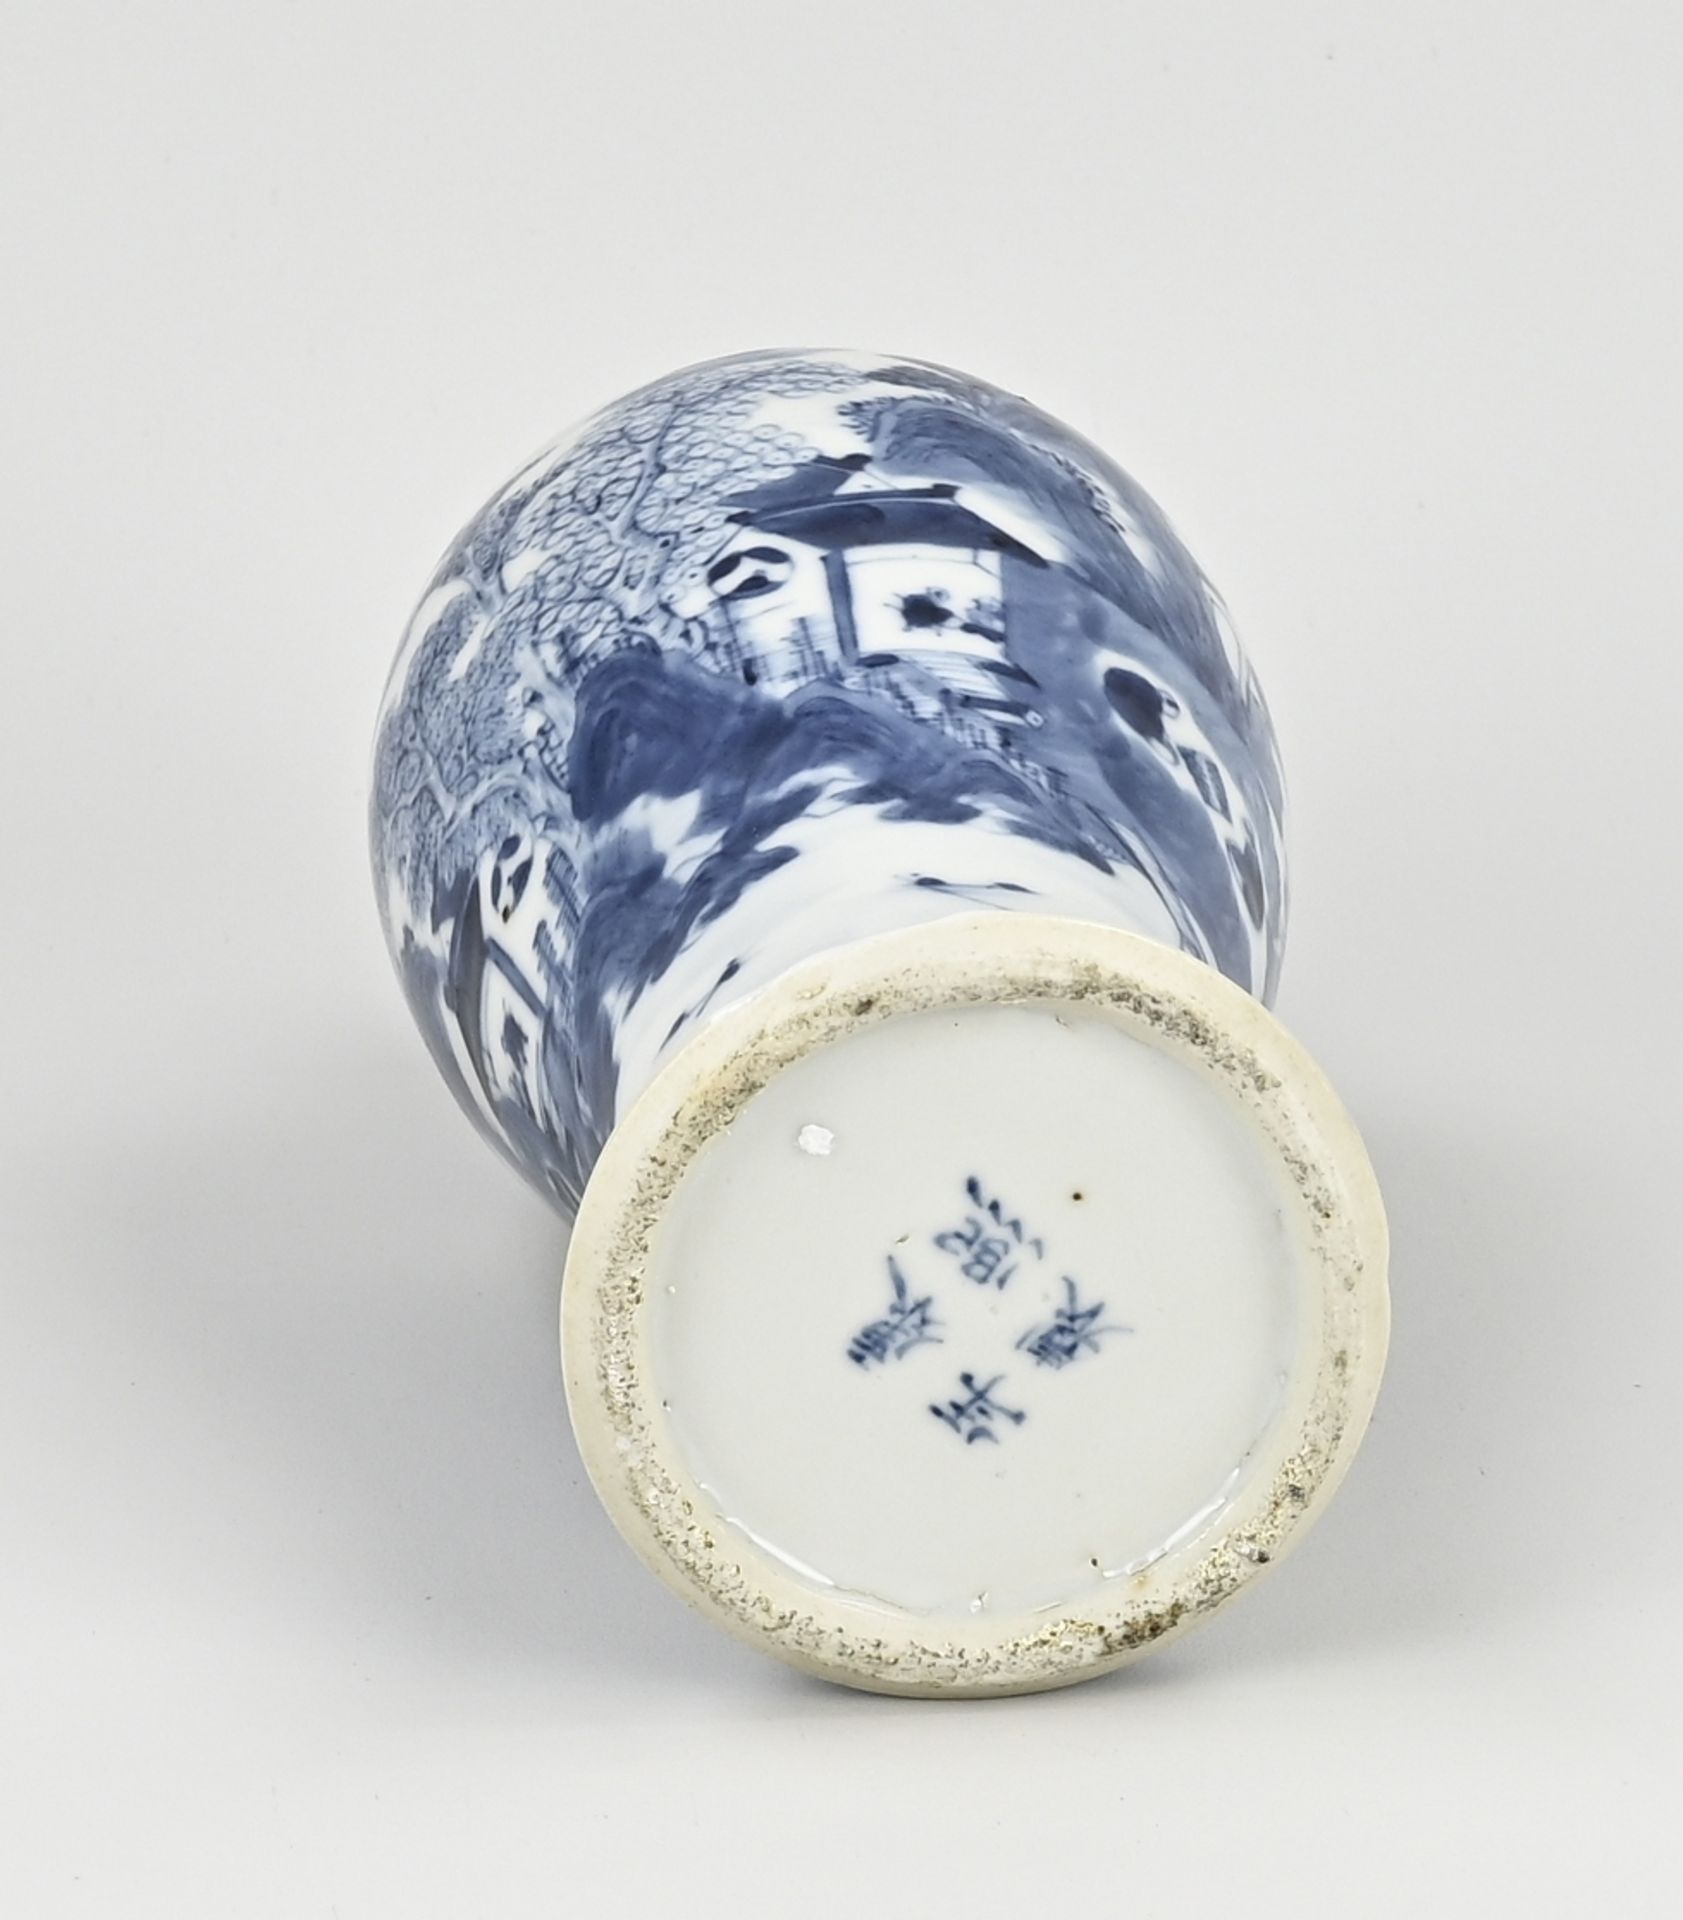 Chinese lidded vase, H 27.5 cm. - Image 2 of 2